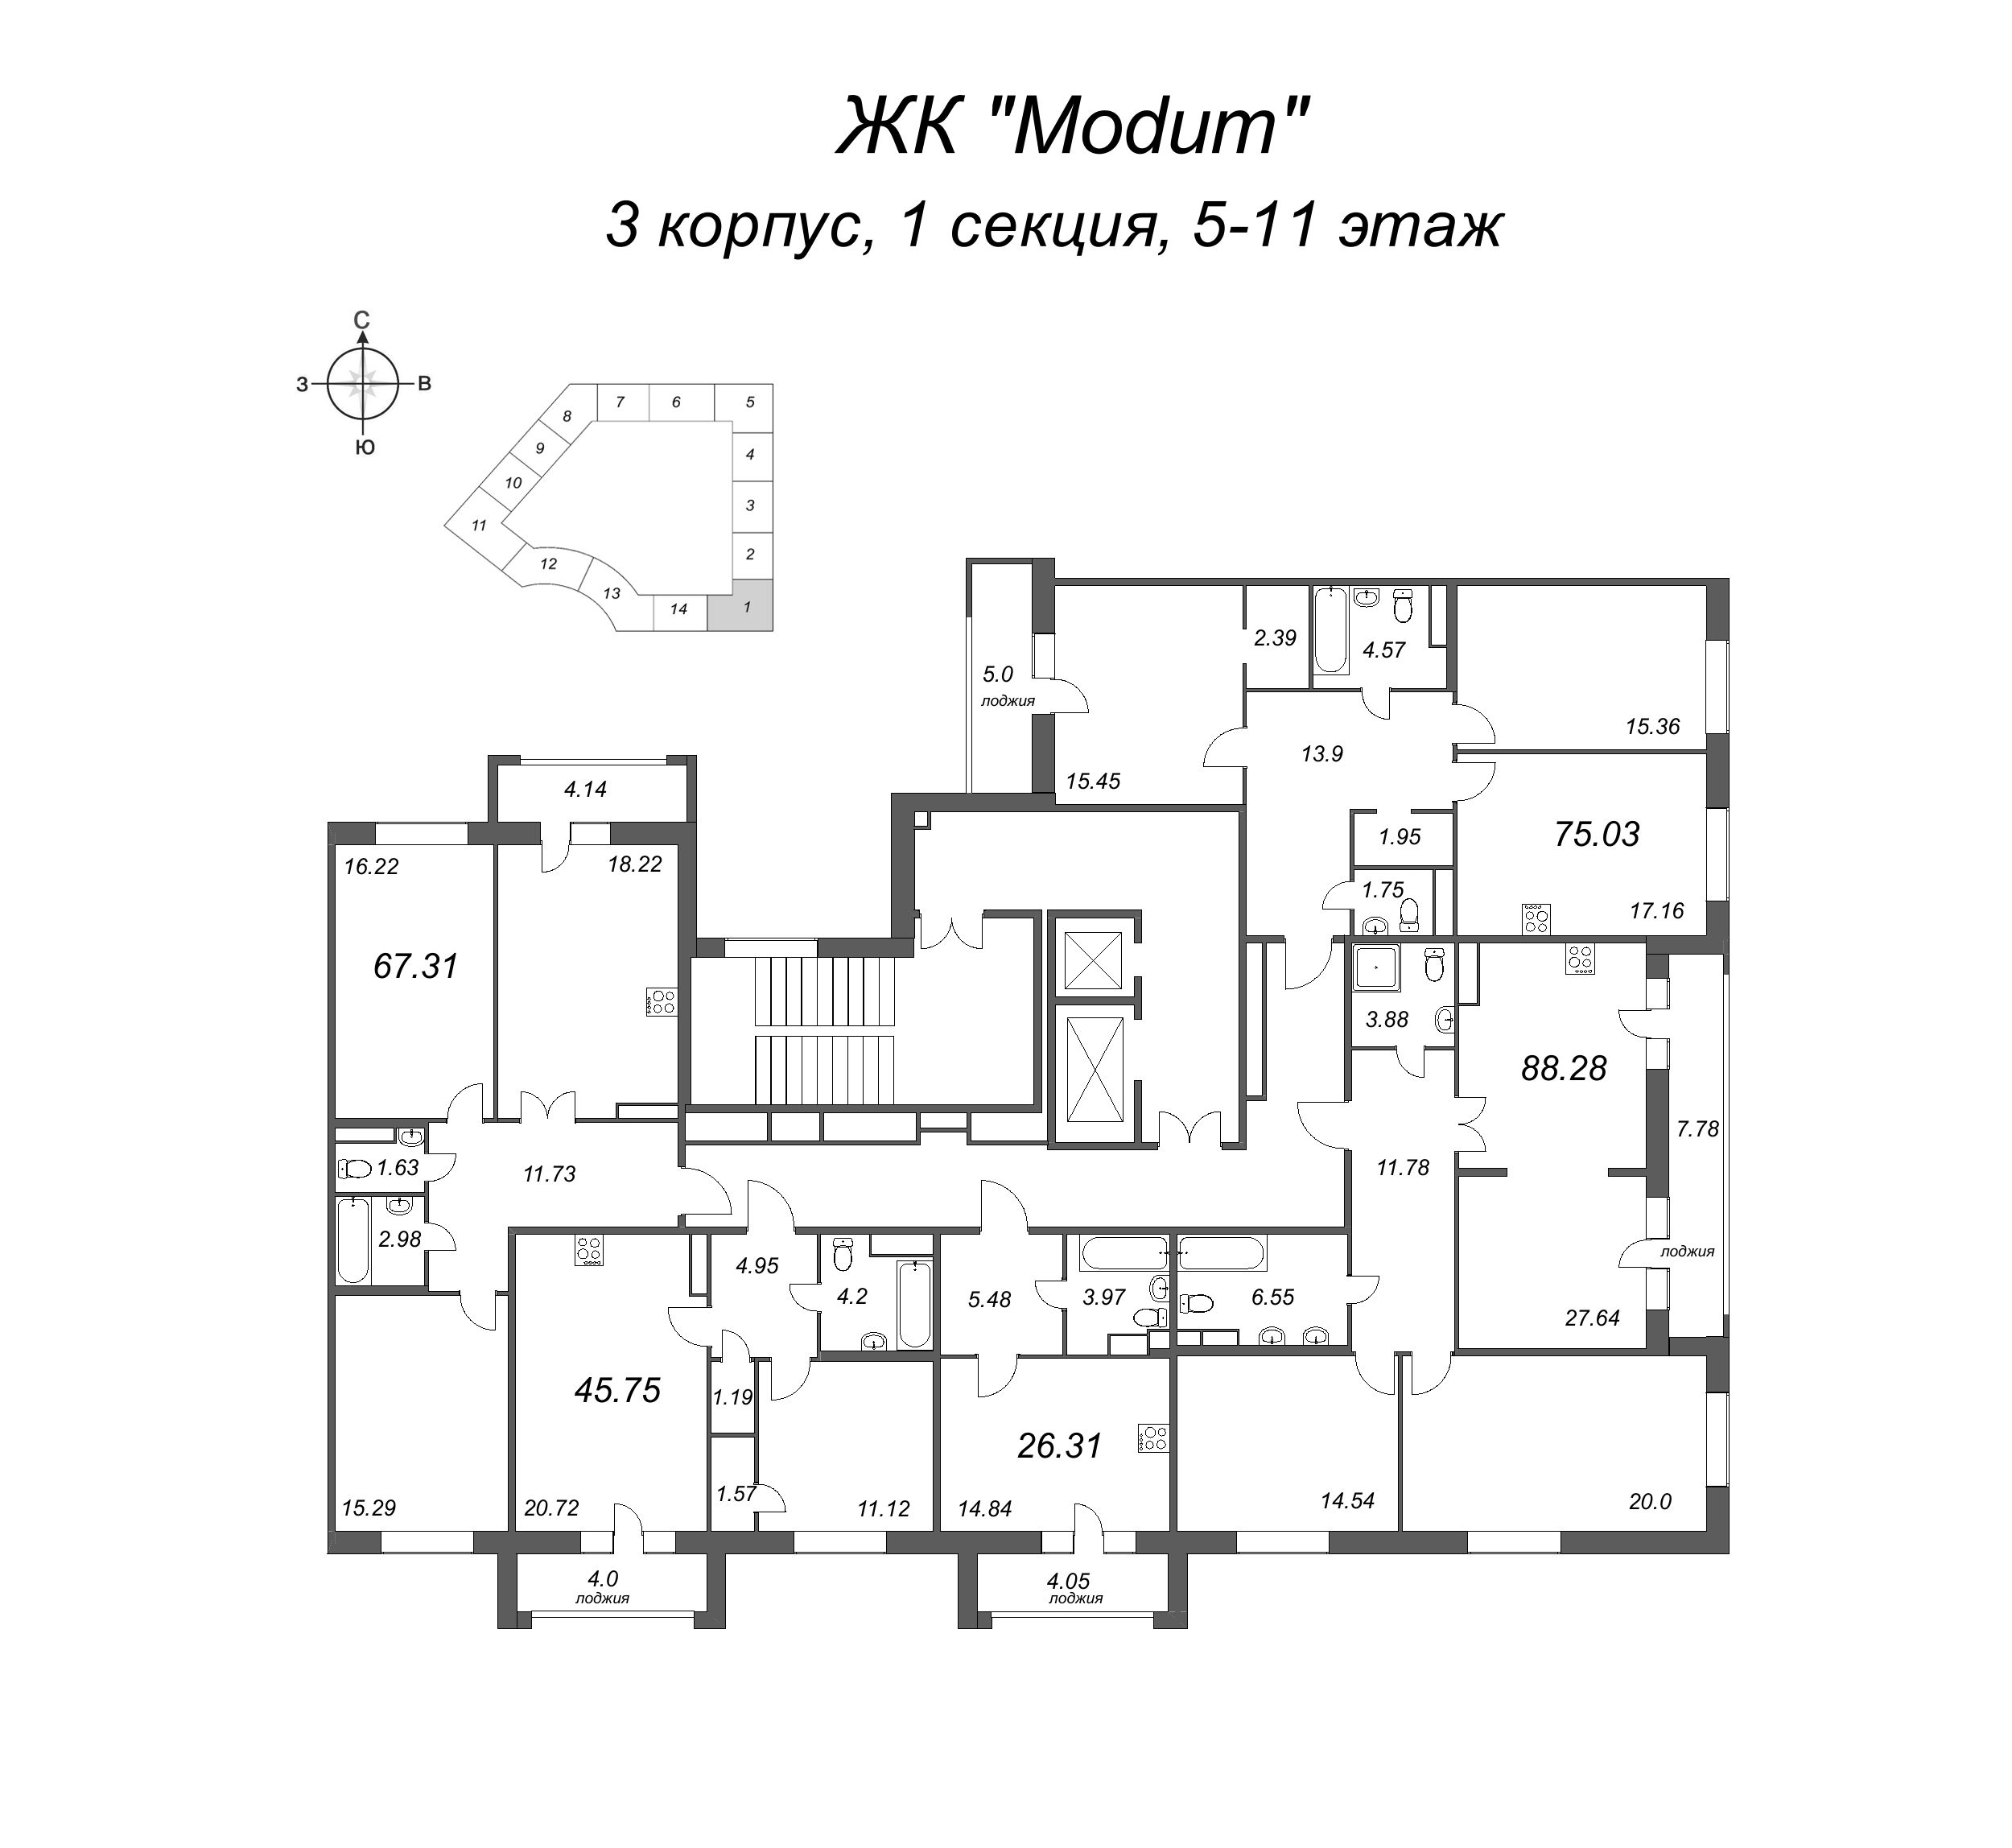 3-комнатная (Евро) квартира, 67.31 м² - планировка этажа